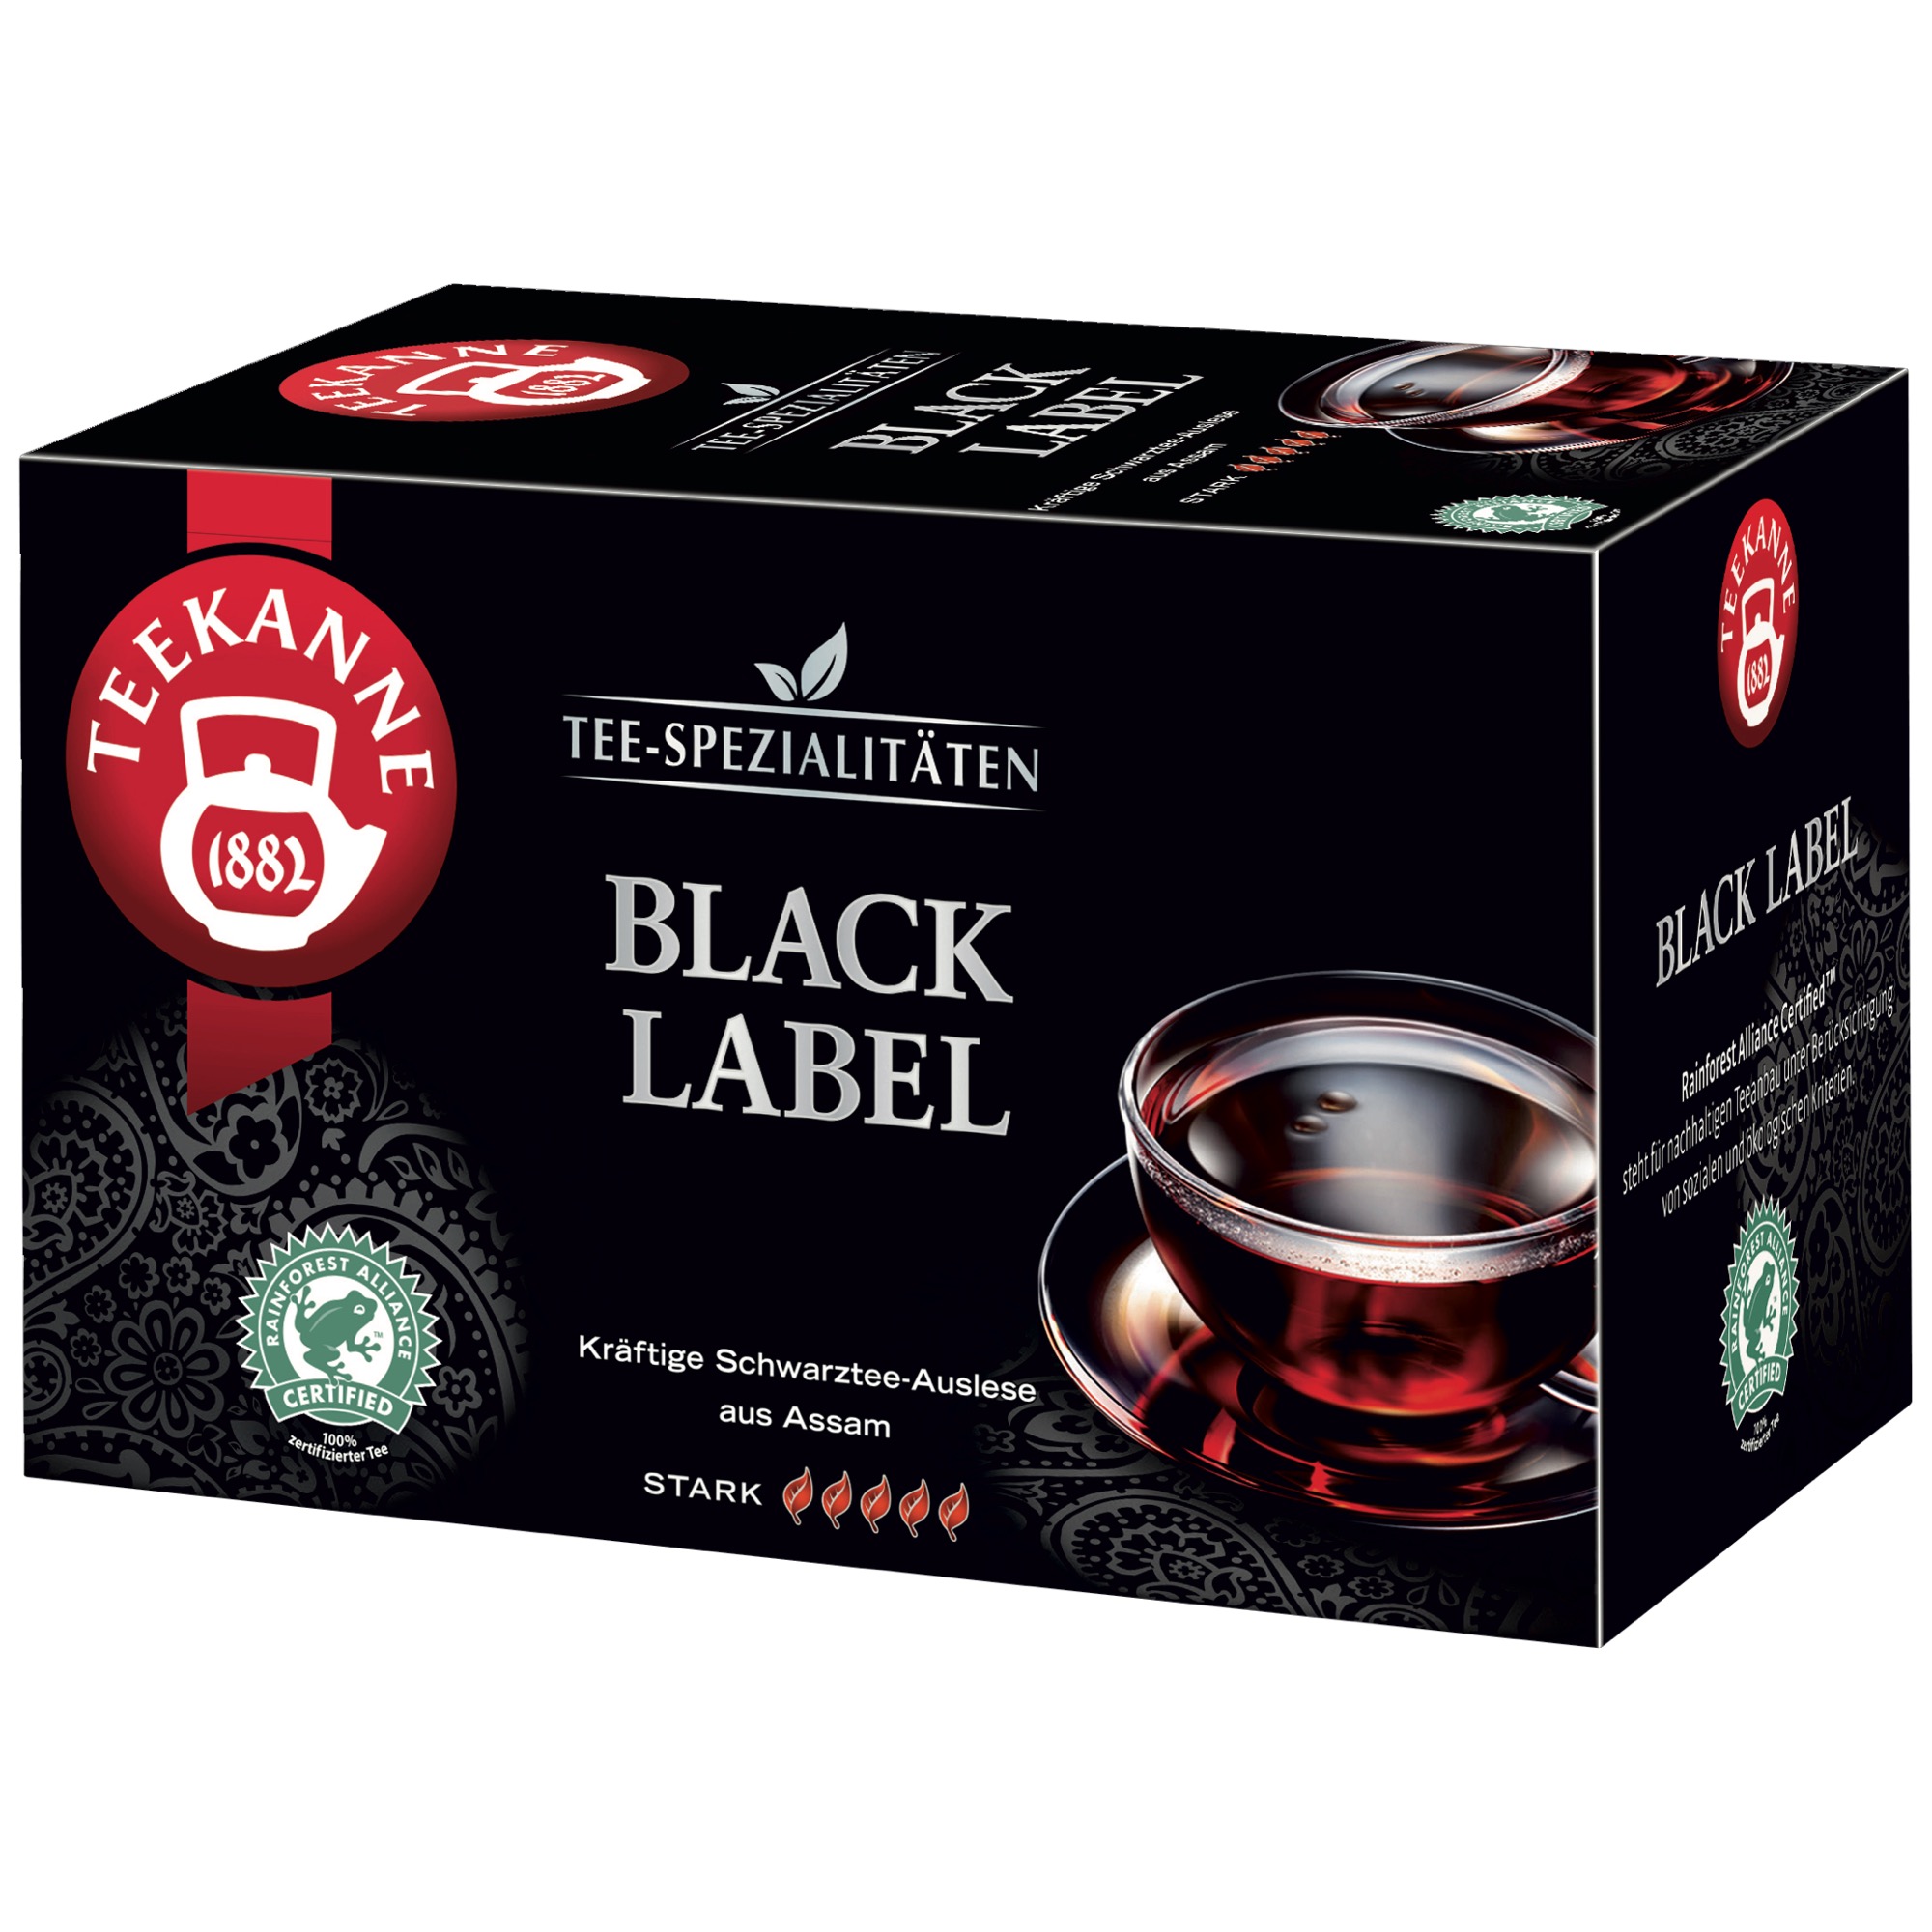 Teekanne Black Label čierny čaj 20ks